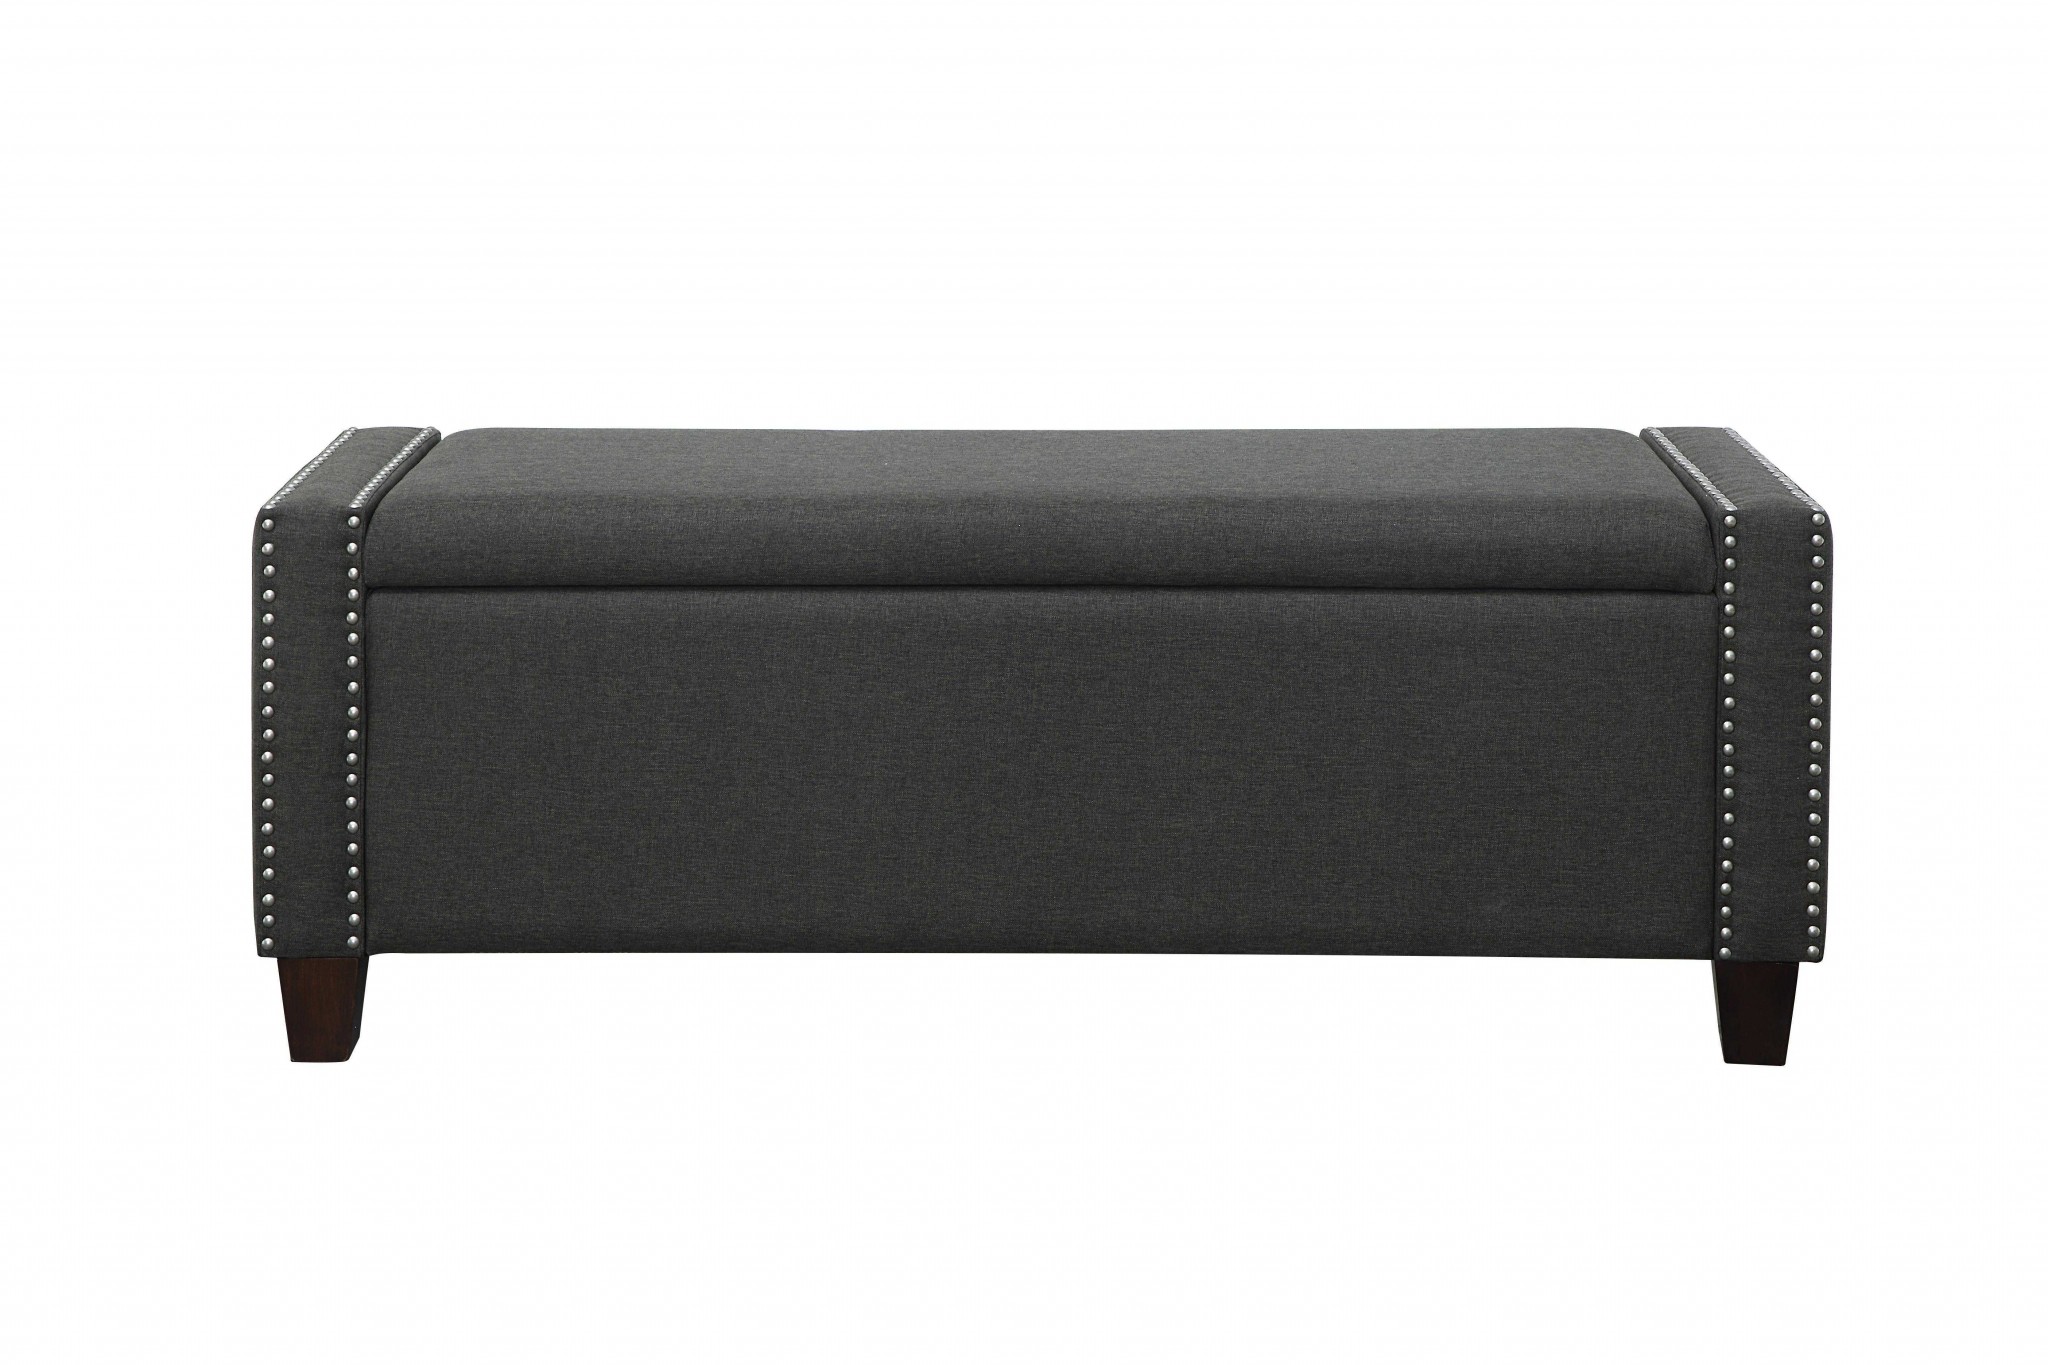 17" X 53" X 19" Dark Olive Linen Upholstery Wood Leg Bench w/Storage